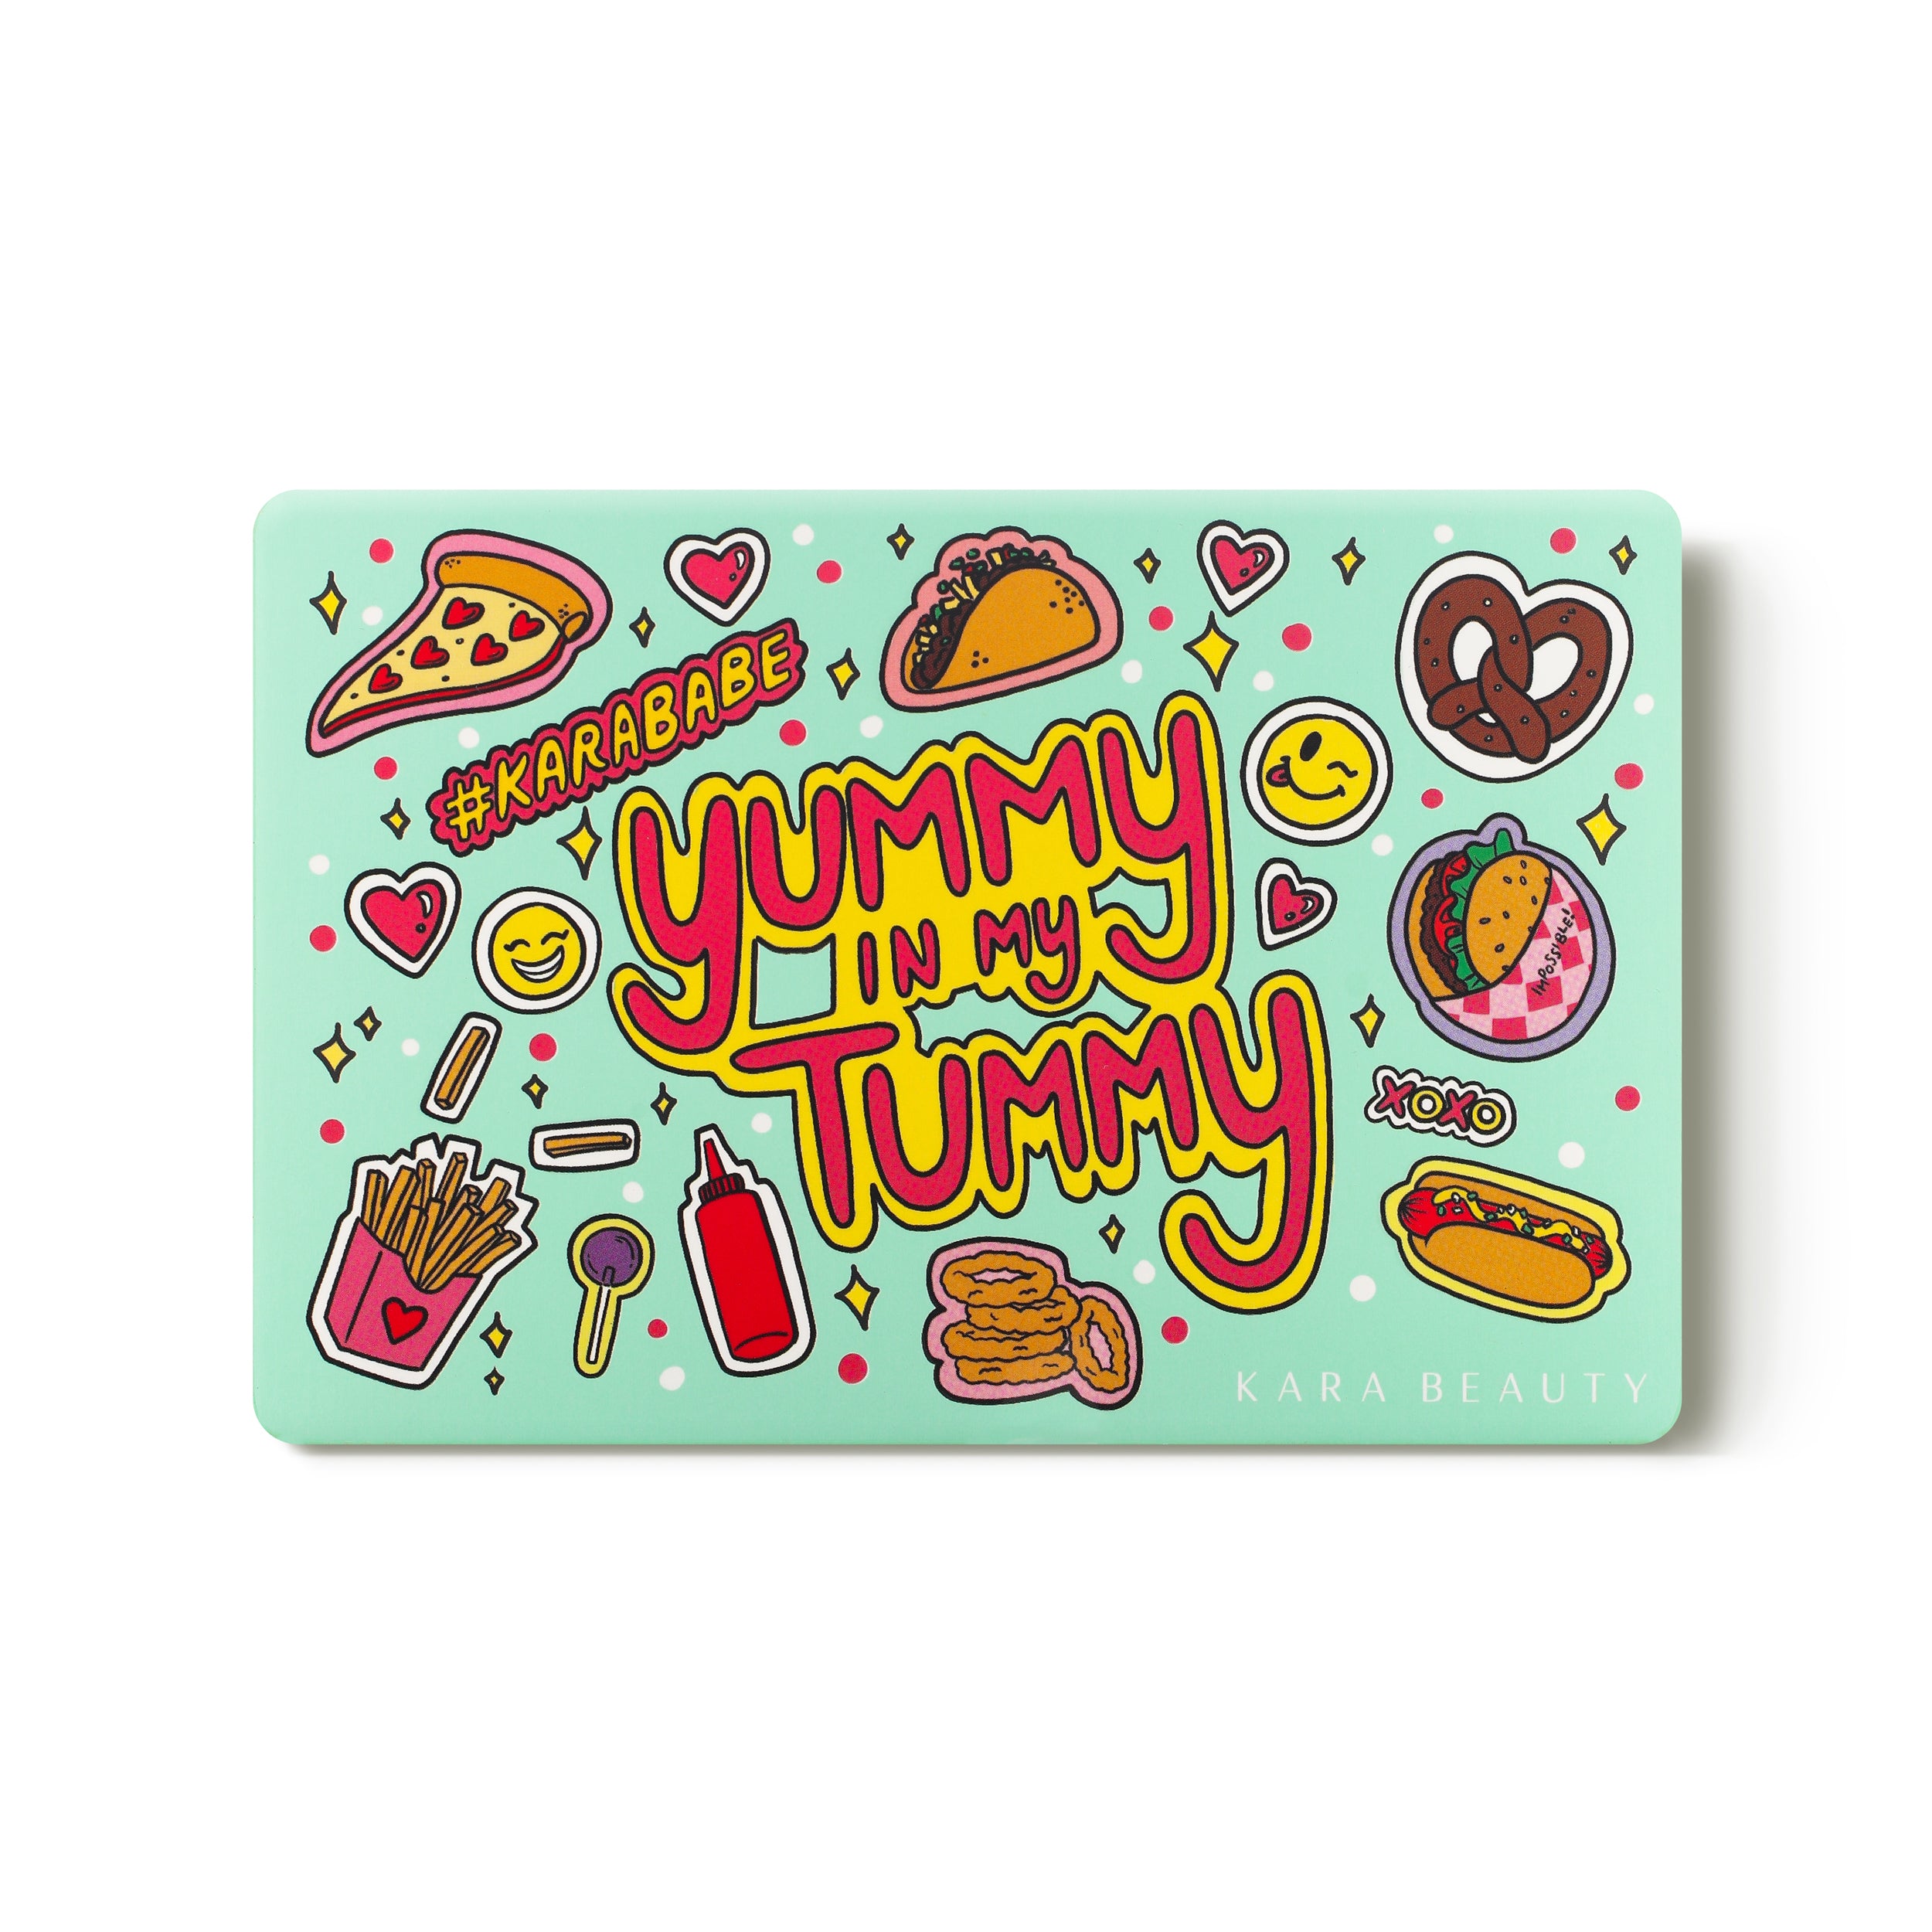 Kara Beauty's Yummy in My Tummy 15-Shade fast-food themed Vegan Eyeshadow Palette